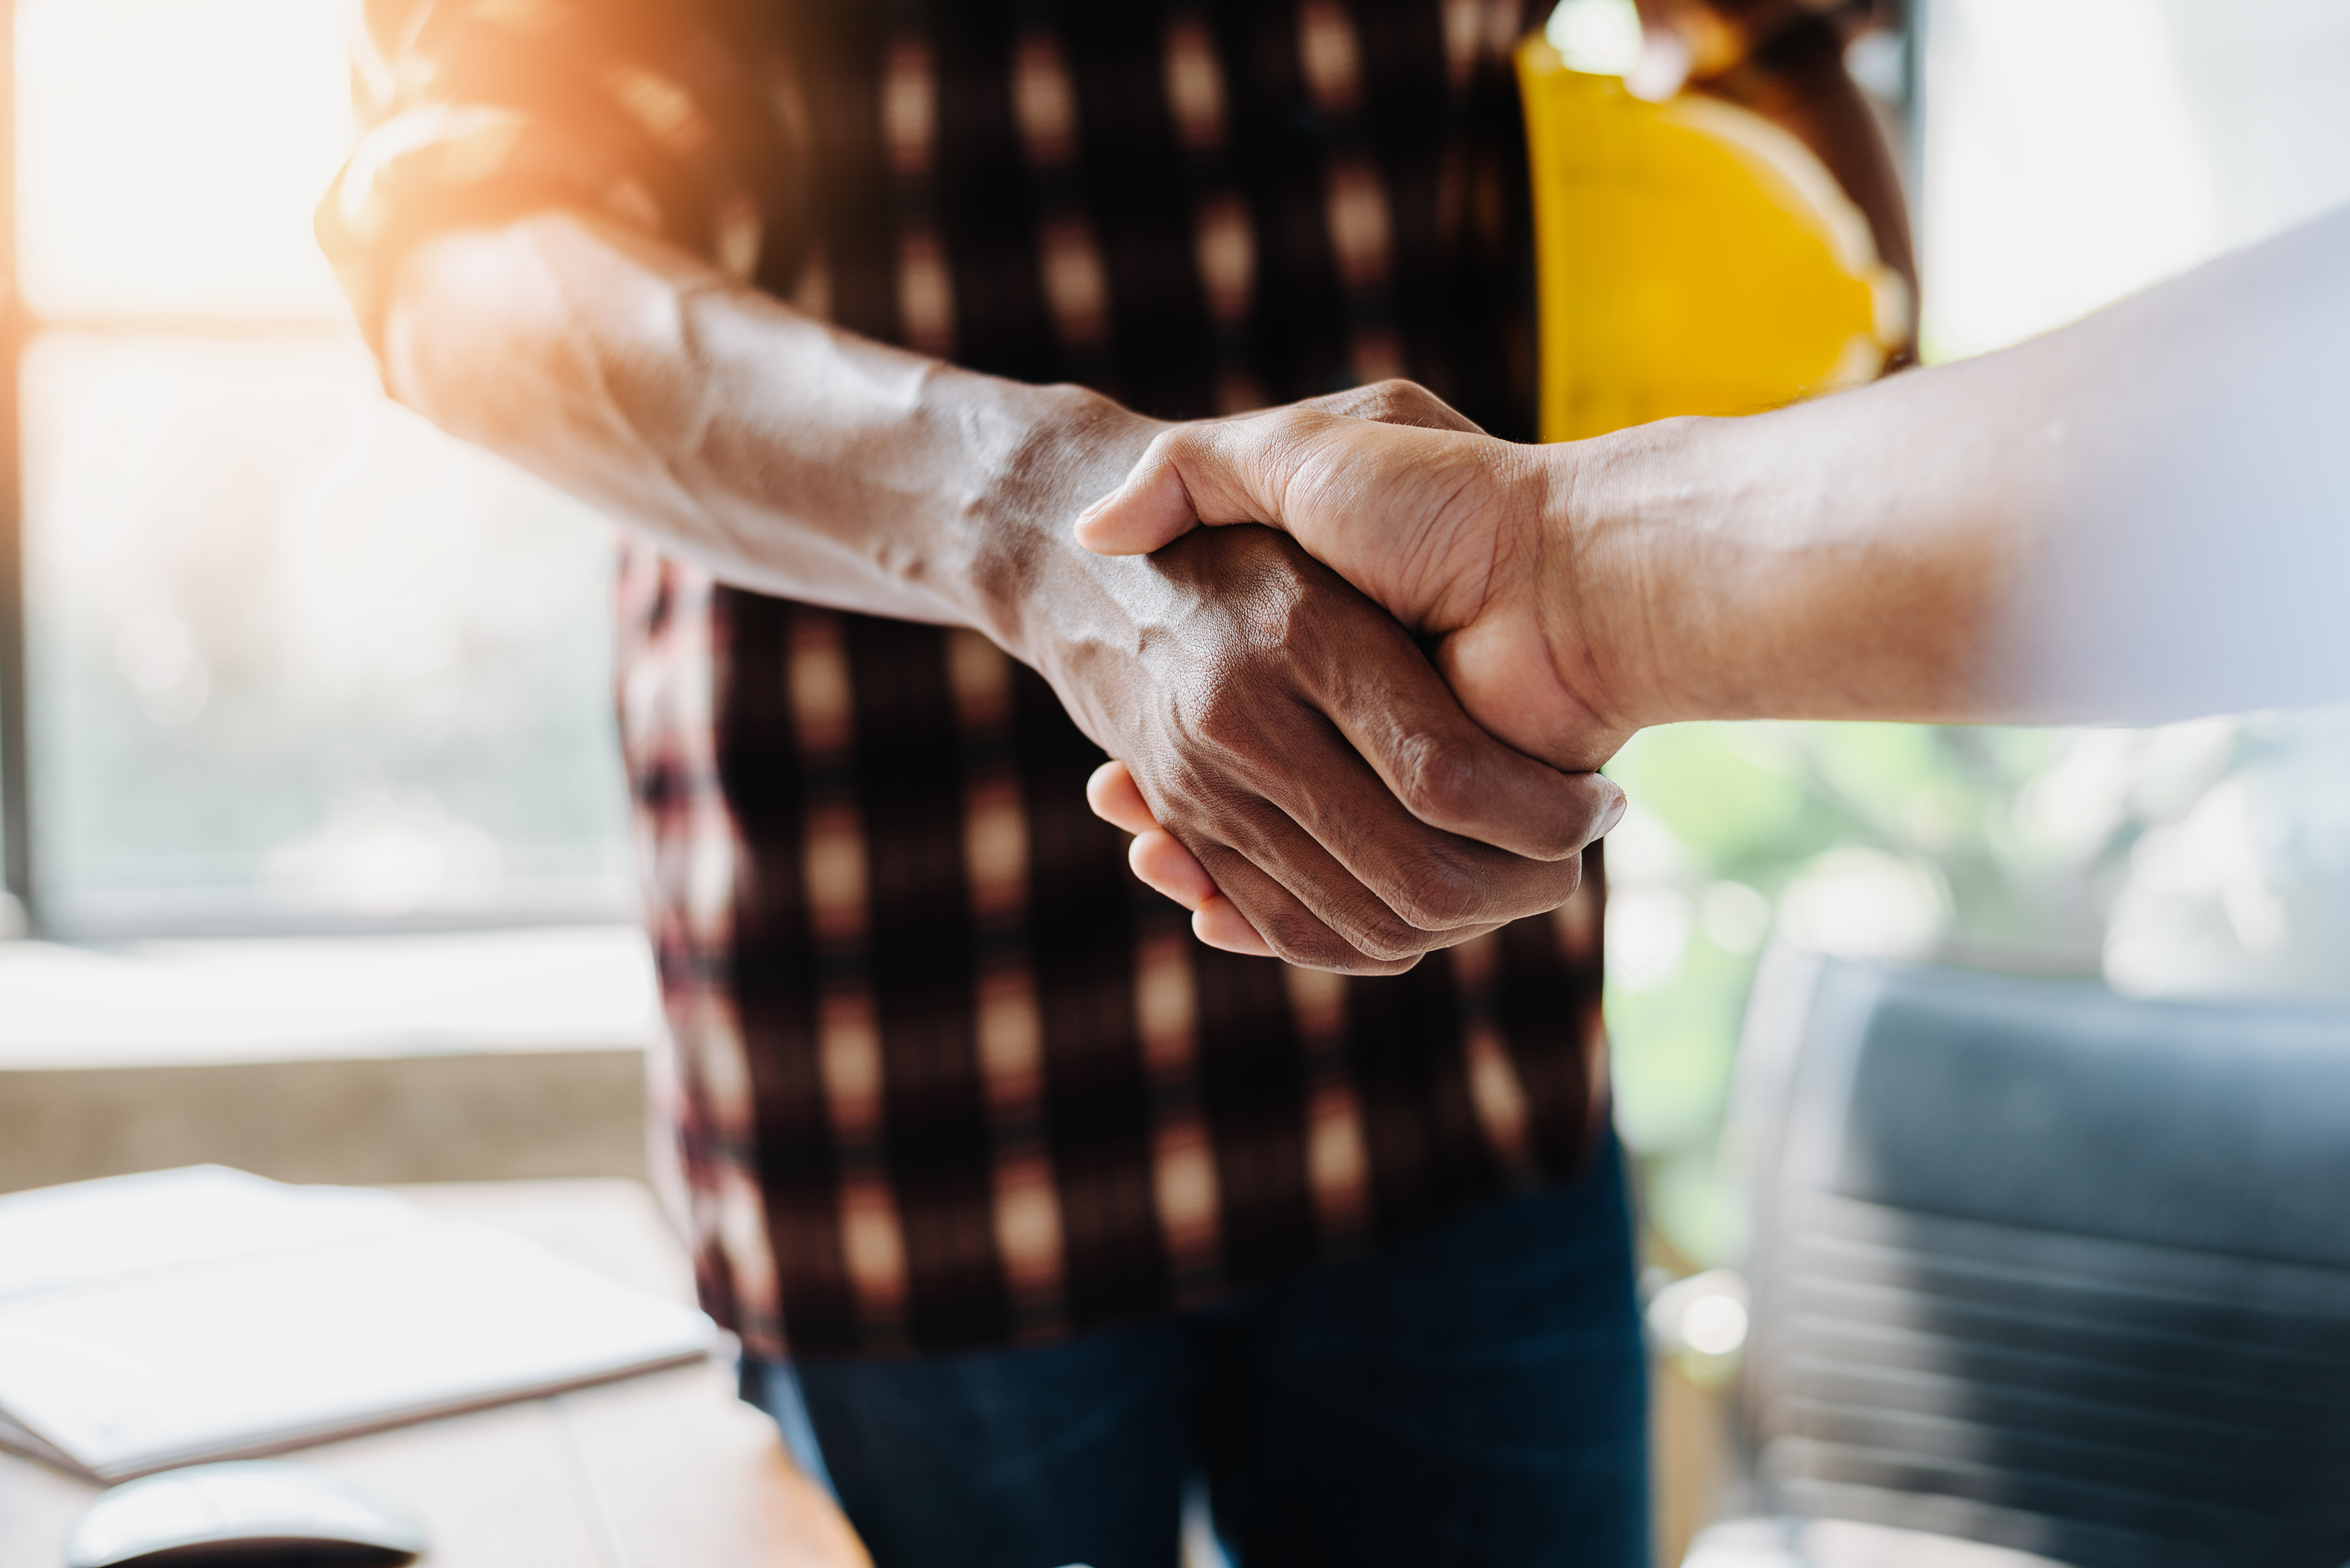 Negotiating business,Image of businessmen Handshaking,happy with work,Handshake Gesturing People Connection Deal Concept.